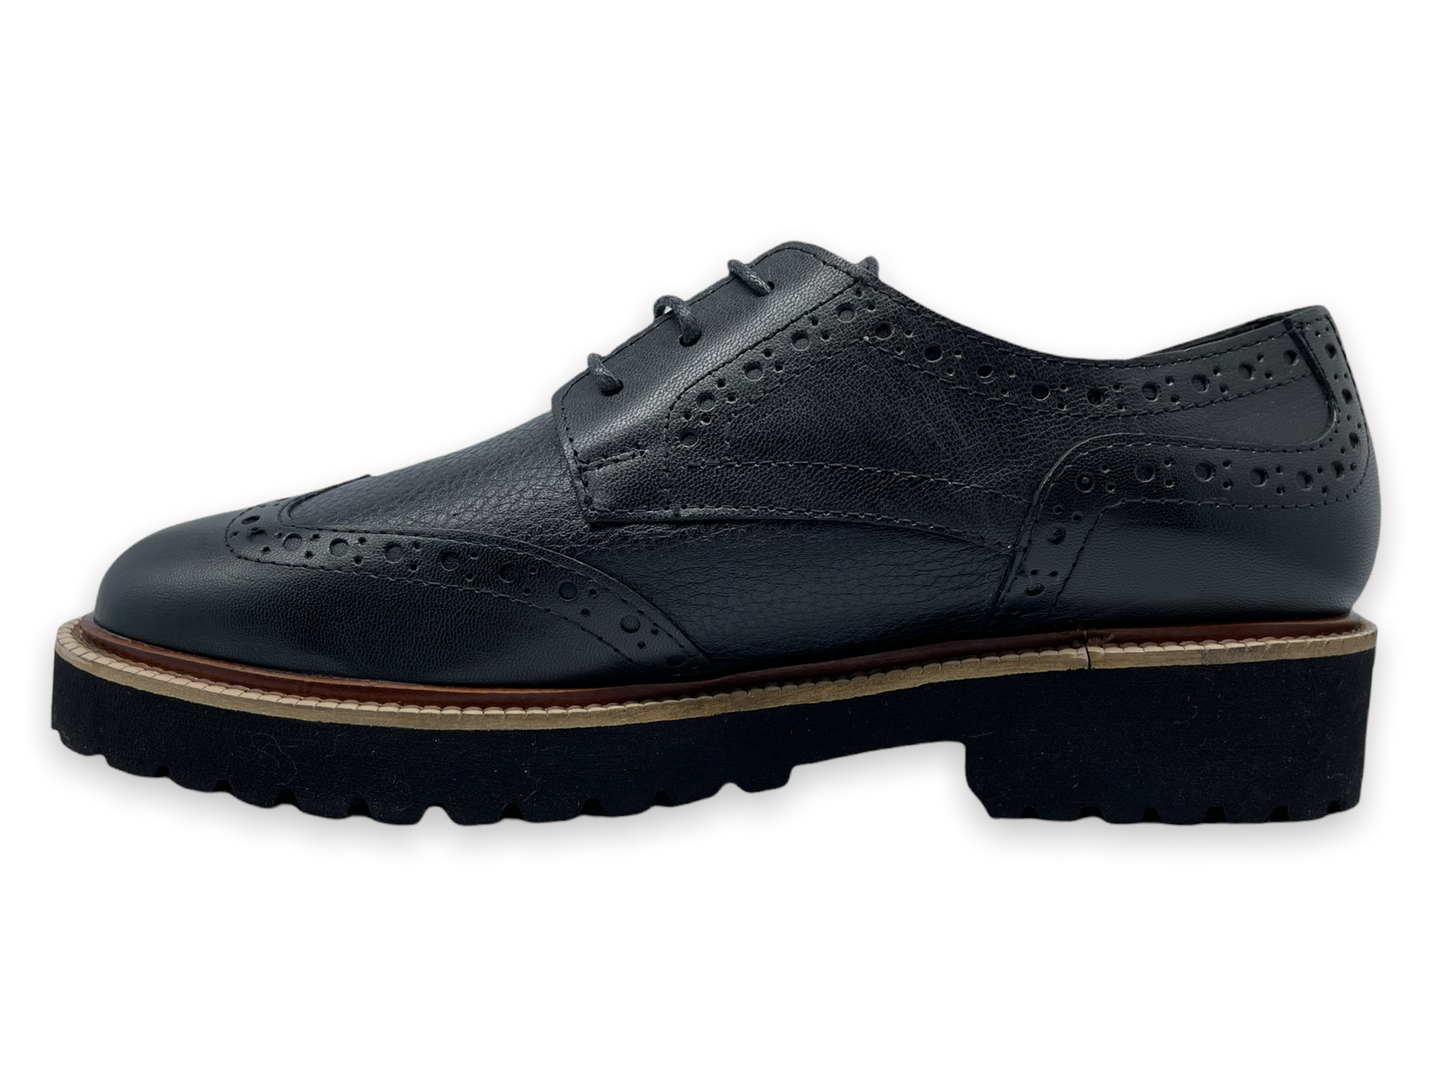 The Tora Black Leather Flat Shoe Final Sale!